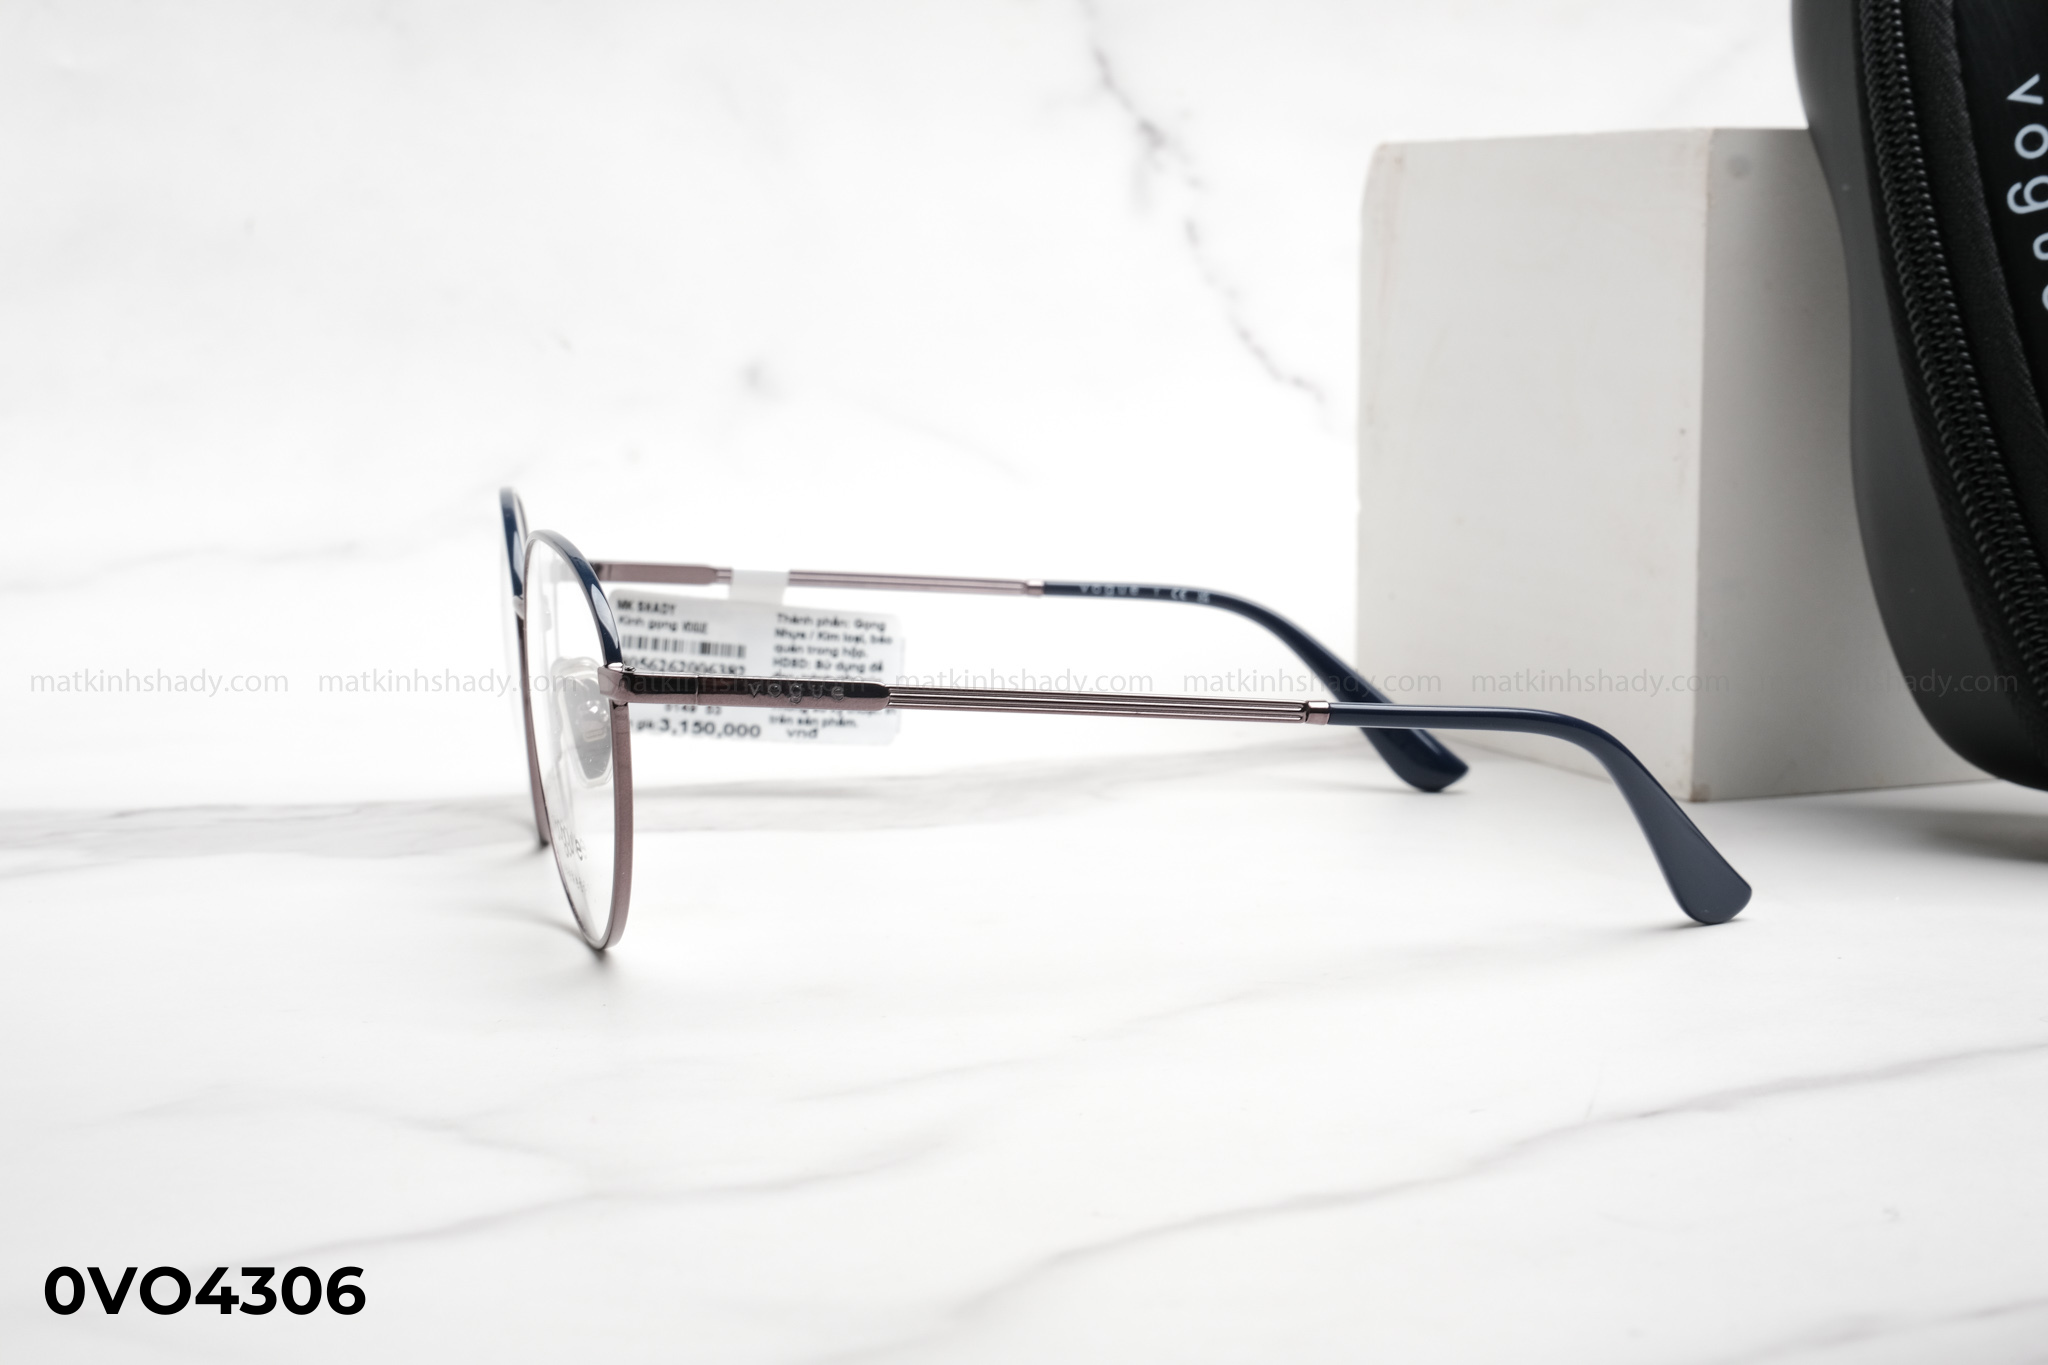  Vogue Eyewear - Glasses - 0VO4306 